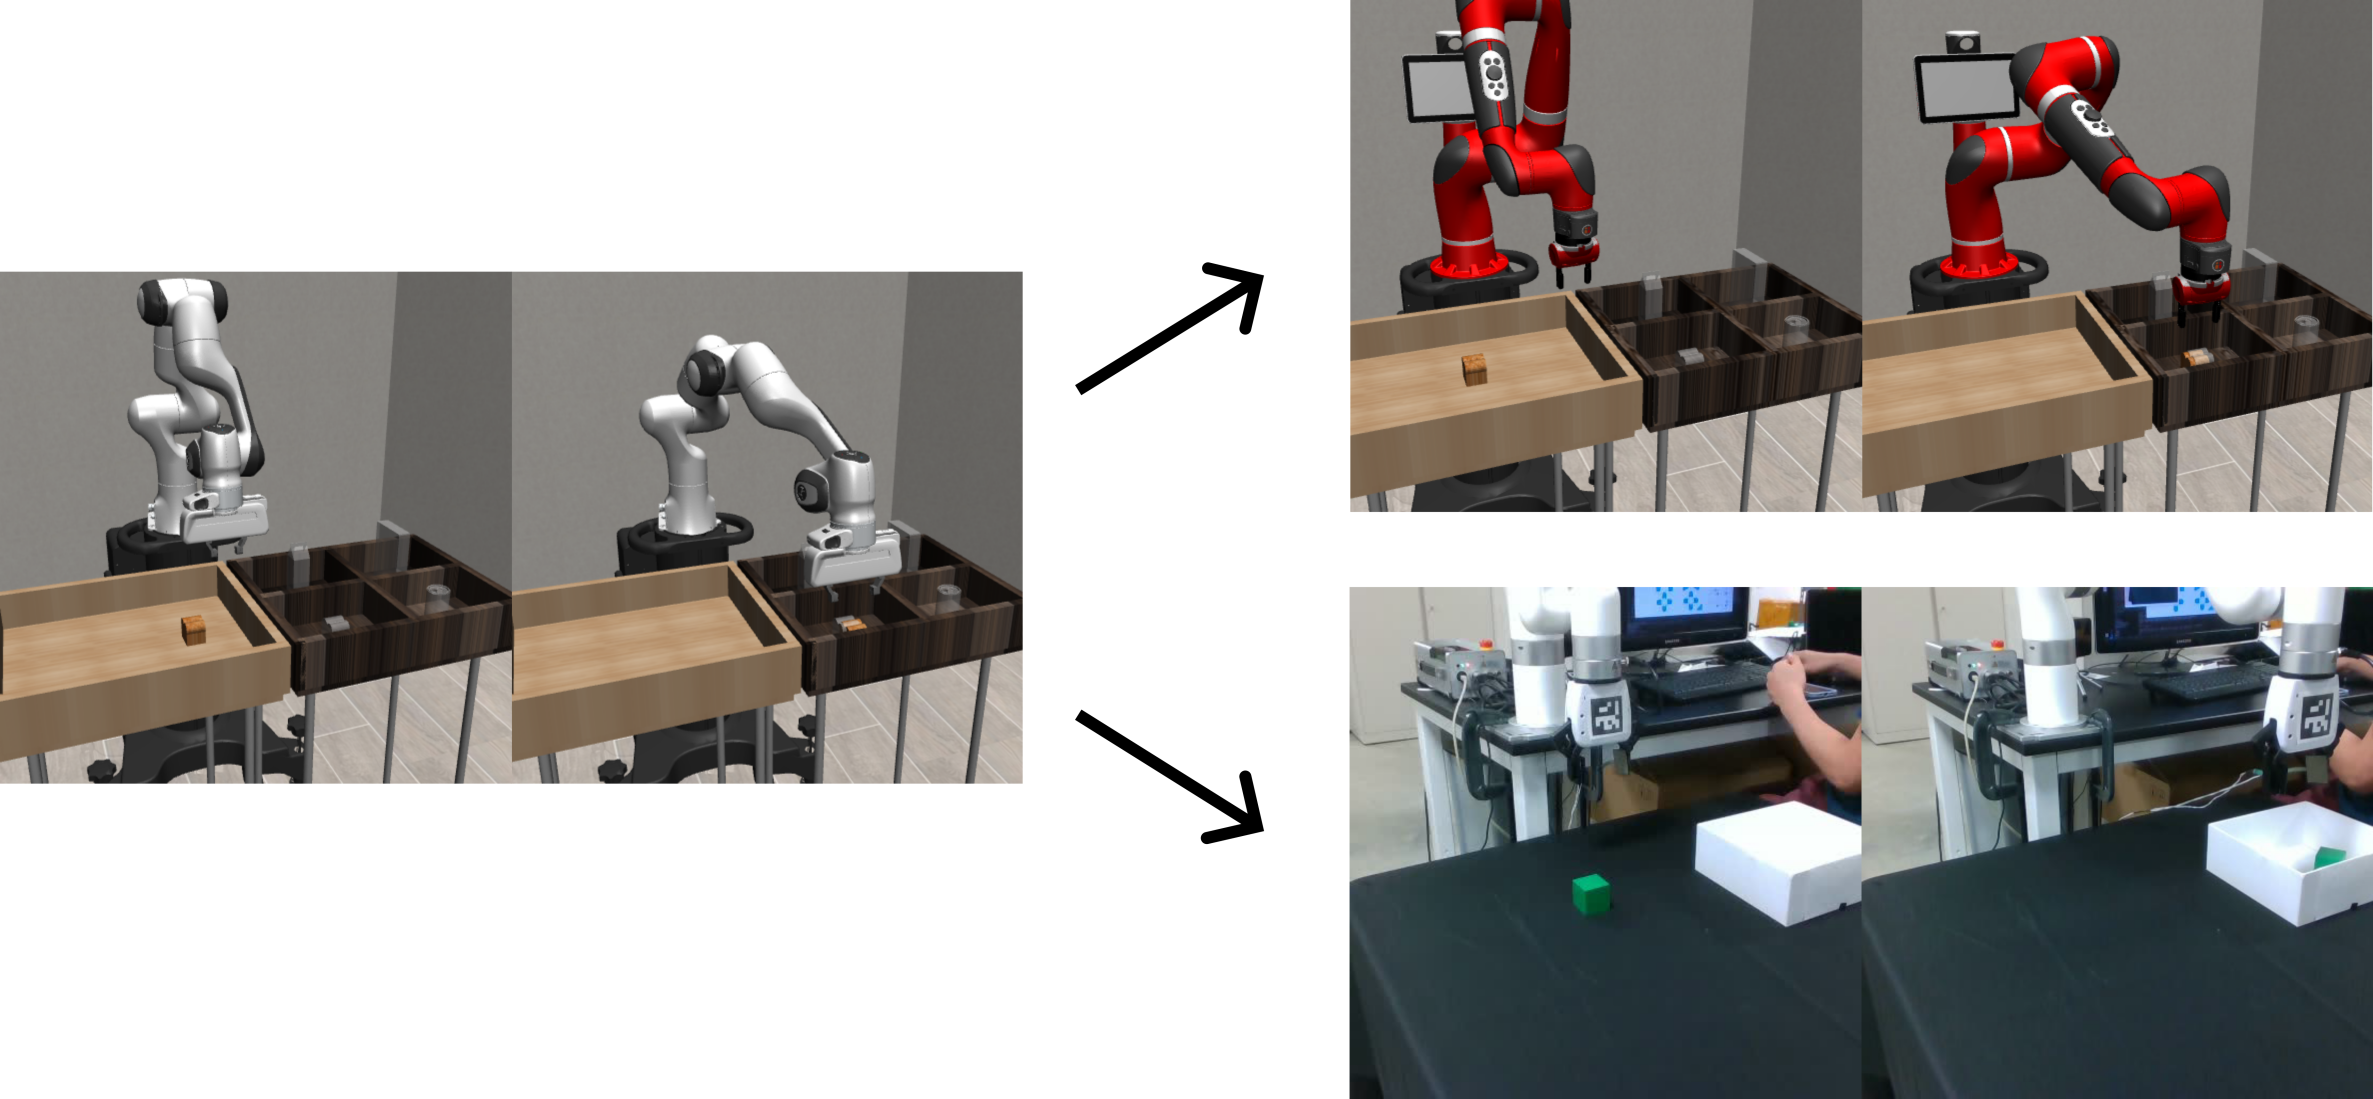 Cross-Embodiment Robot Manipulation Skill Transfer using Latent Space Alignment